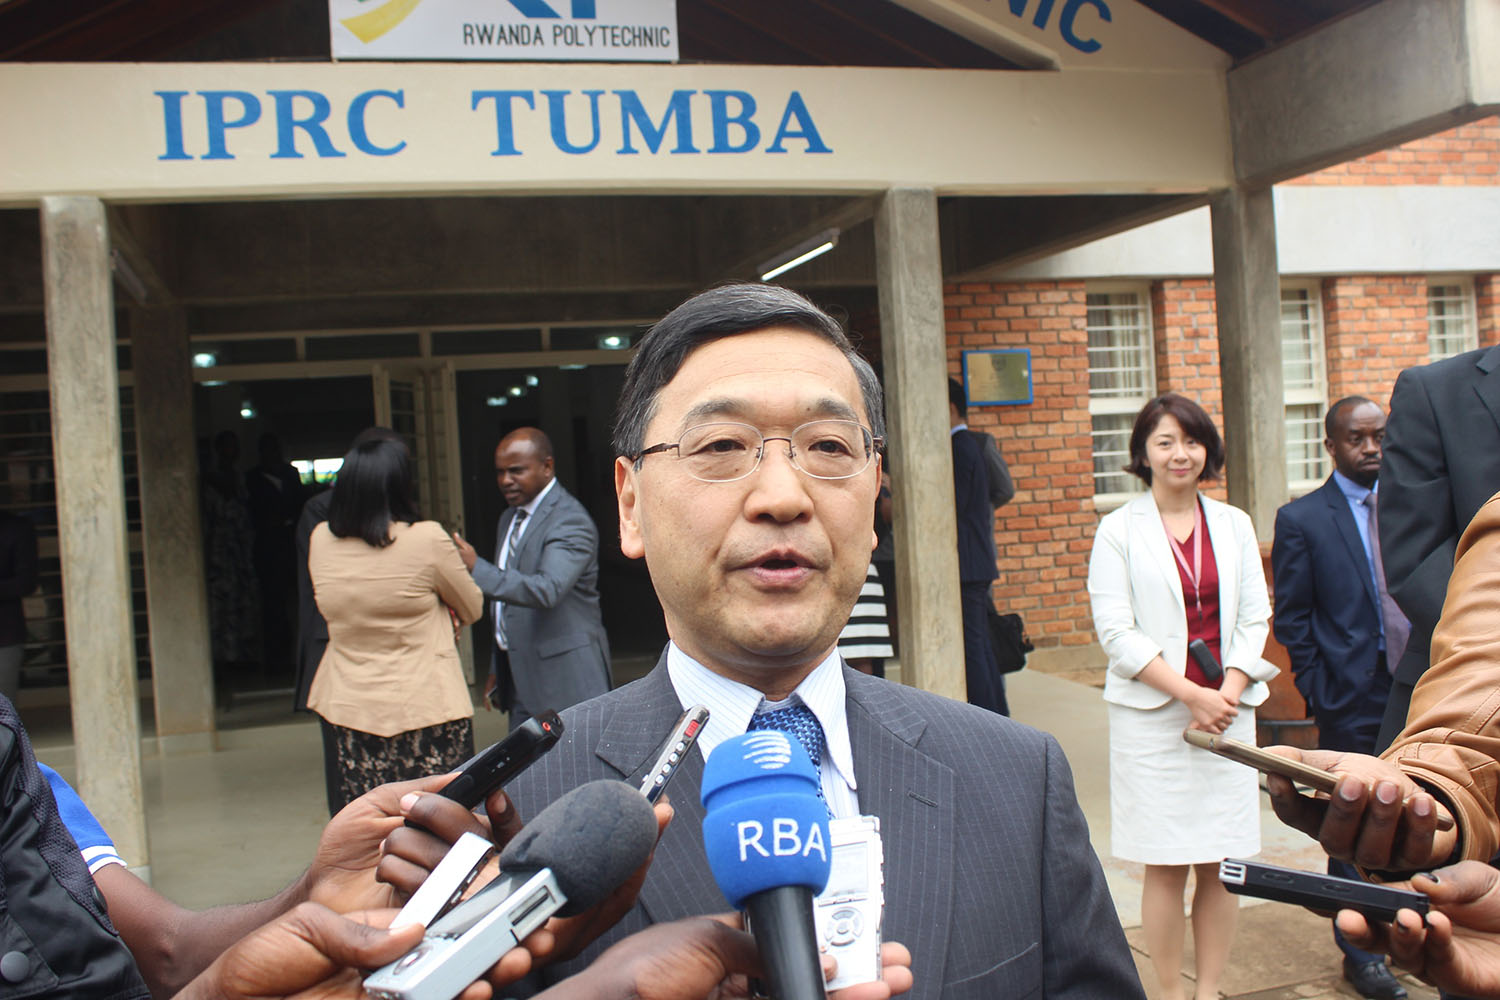 The ambassador of Japan to Rwanda, Takayuki Miyashita adressing the media.